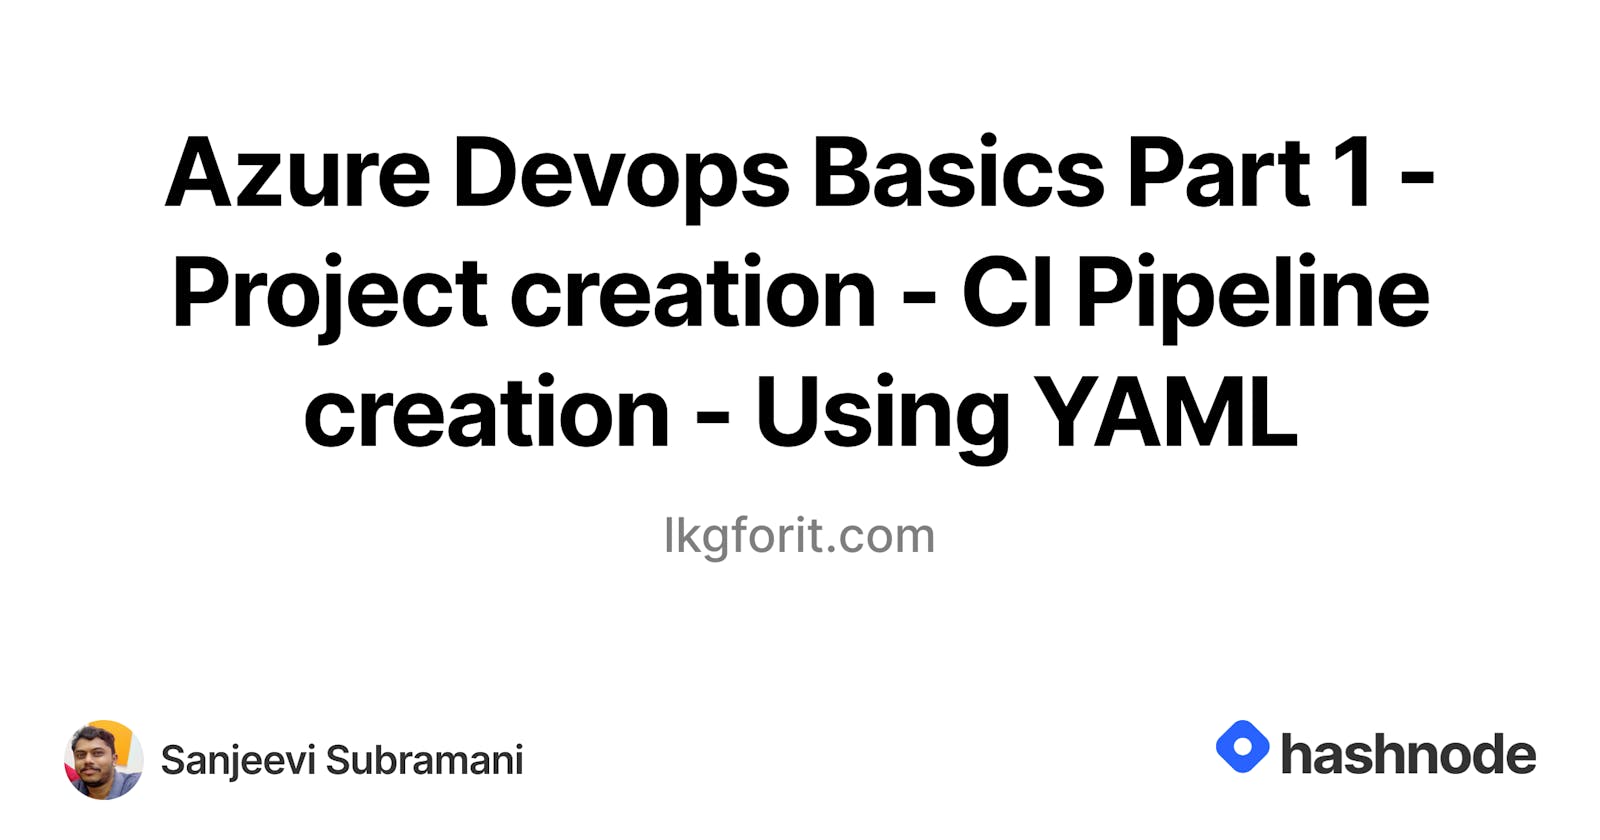 Azure Devops Basics Part 1 - Project creation - CI Pipeline creation - Using YAML